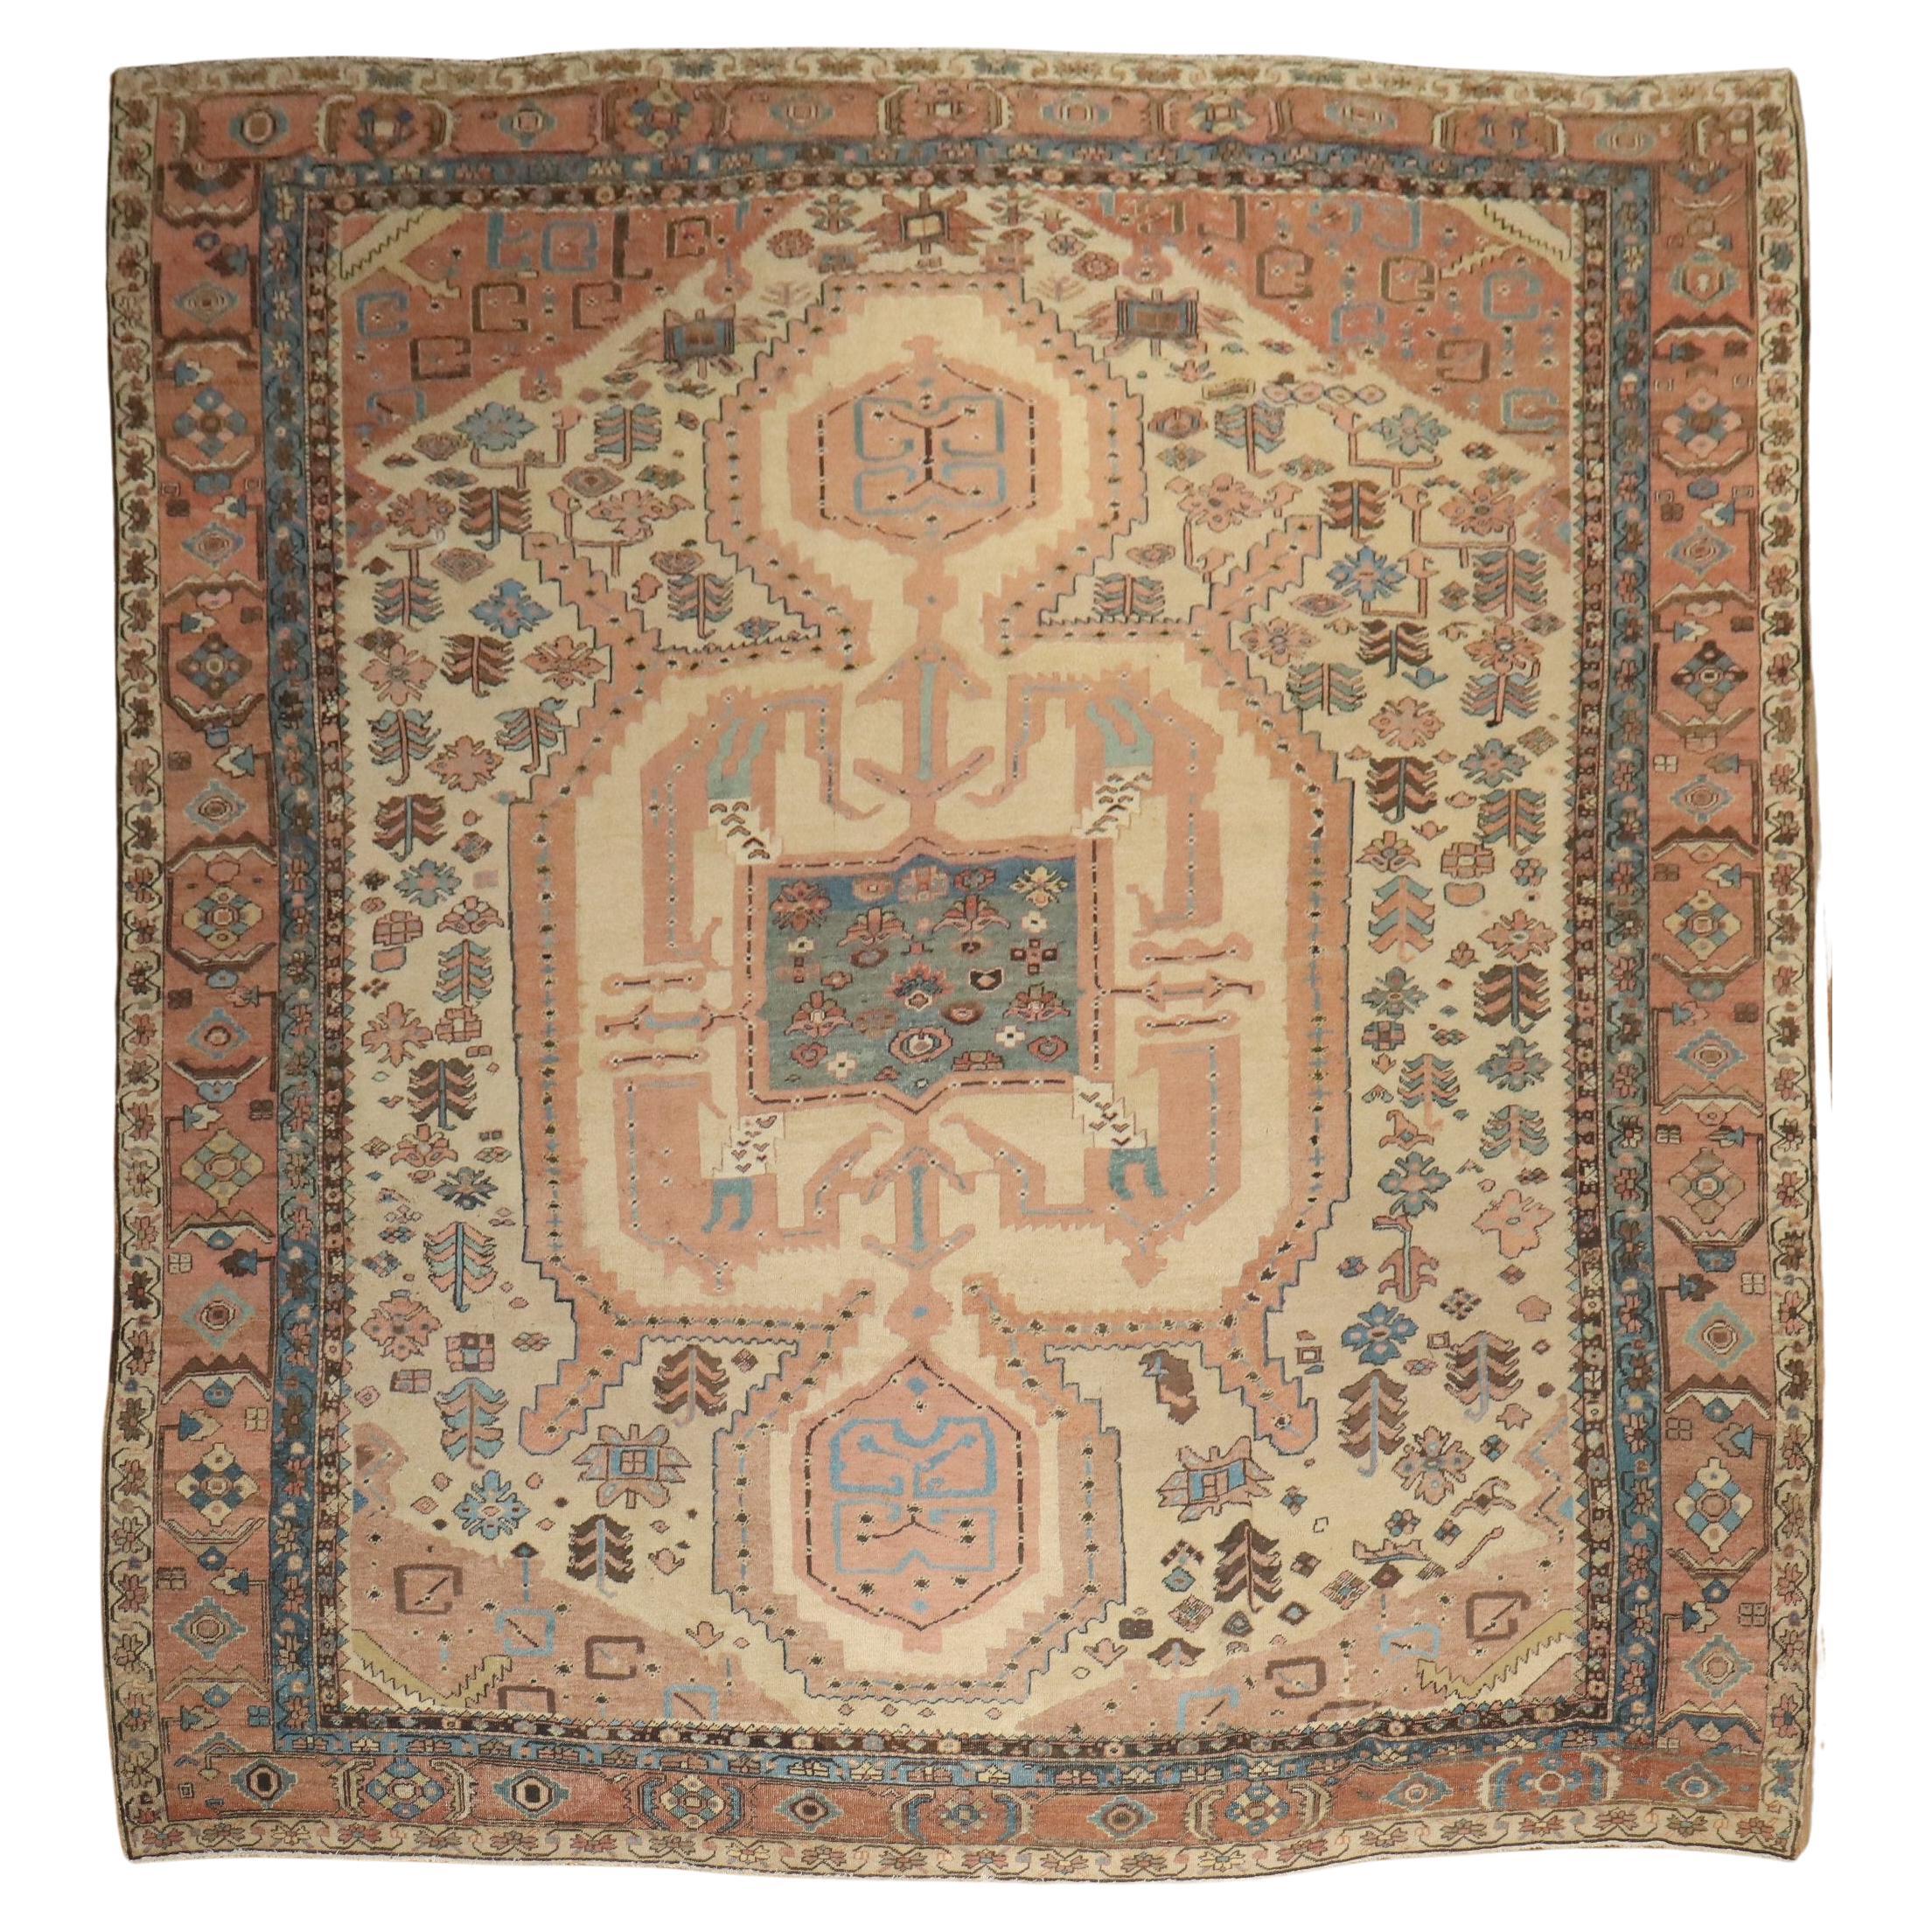 Zabihi Collection Decorative Antique Persian Bakshaish Rug